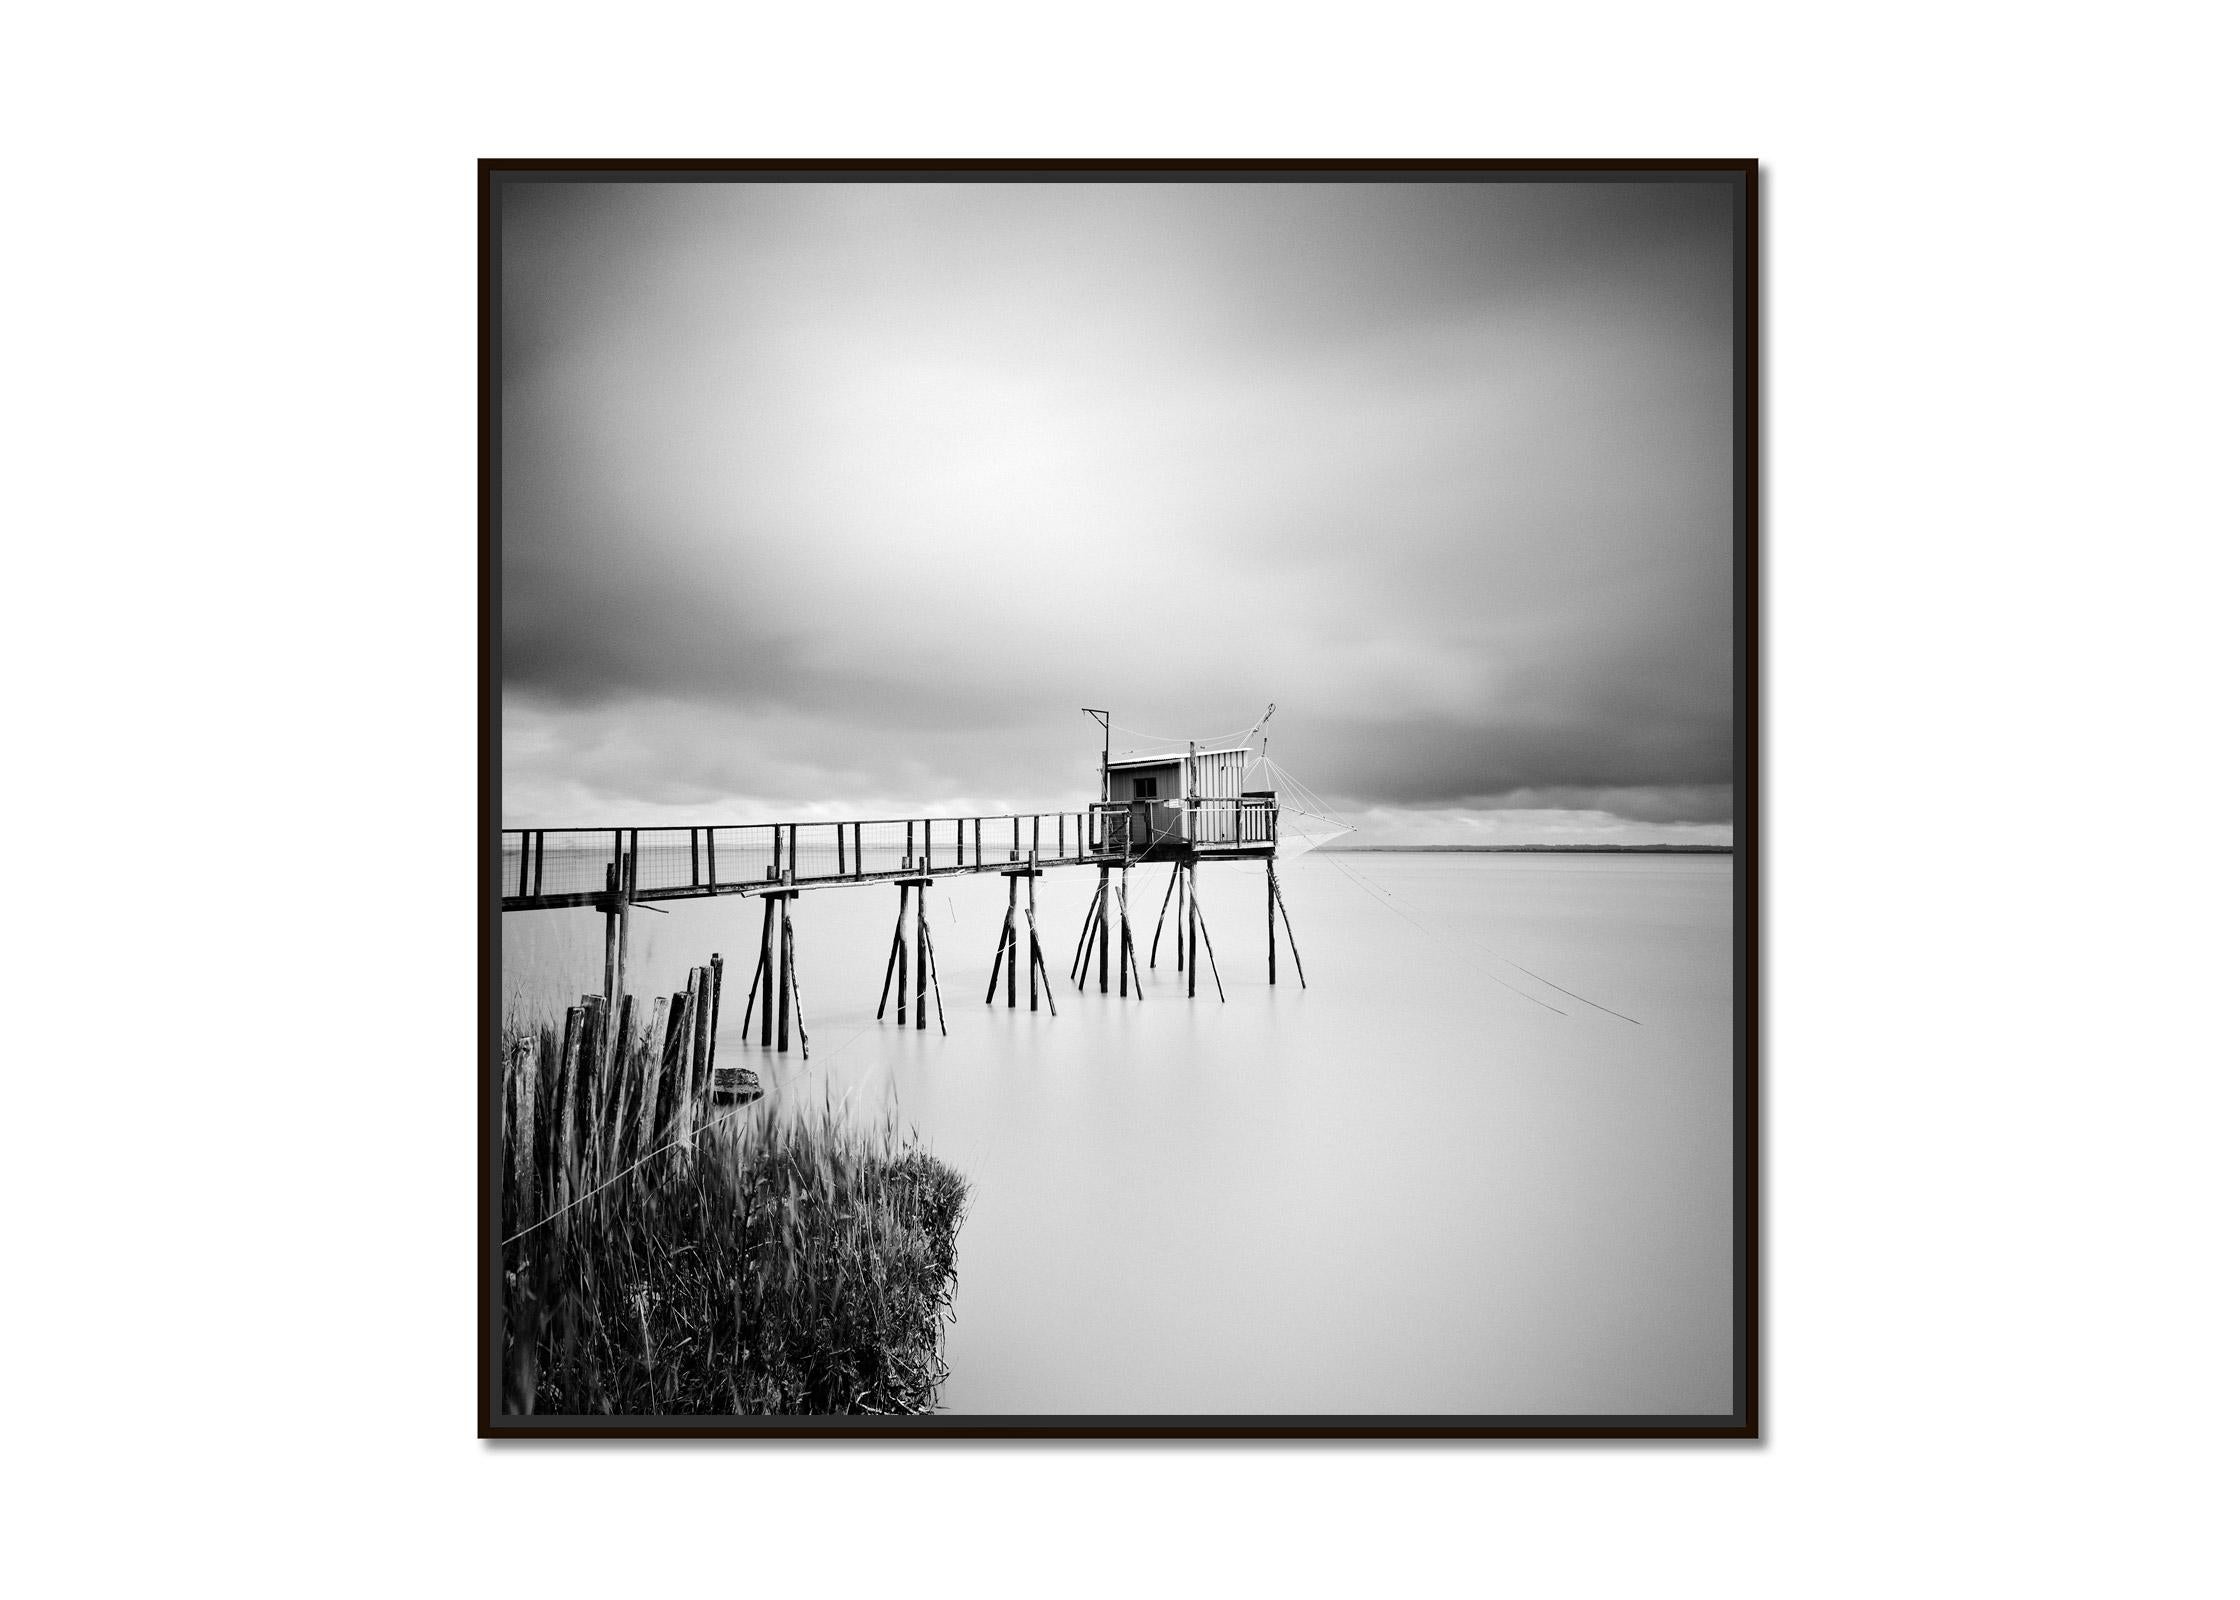 Stilt House, carrelet, fishing, France, black and white photography, landscape - Photograph by Gerald Berghammer